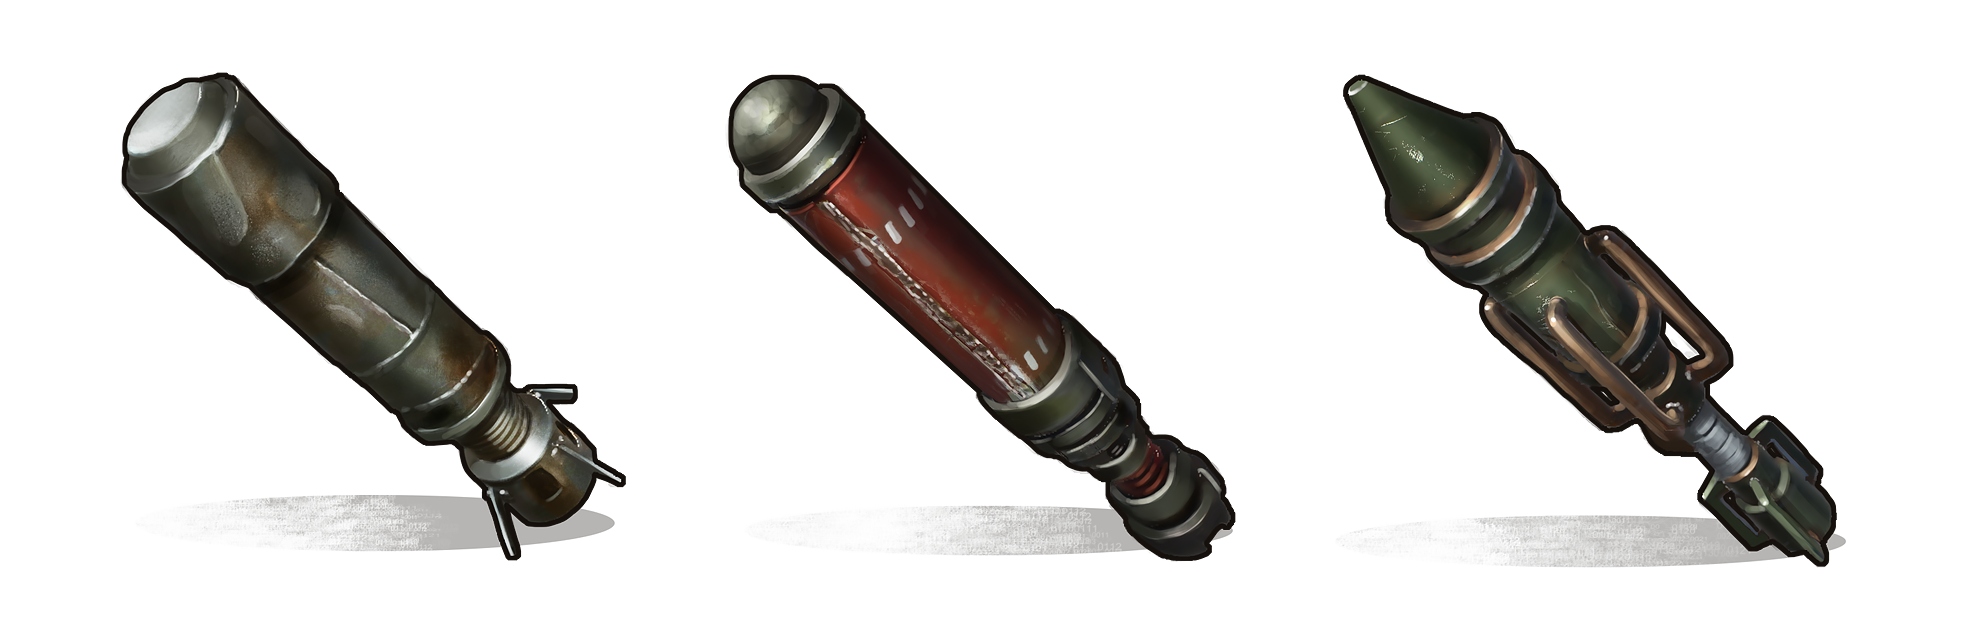 Strange rust botkiller rocket launcher фото 78